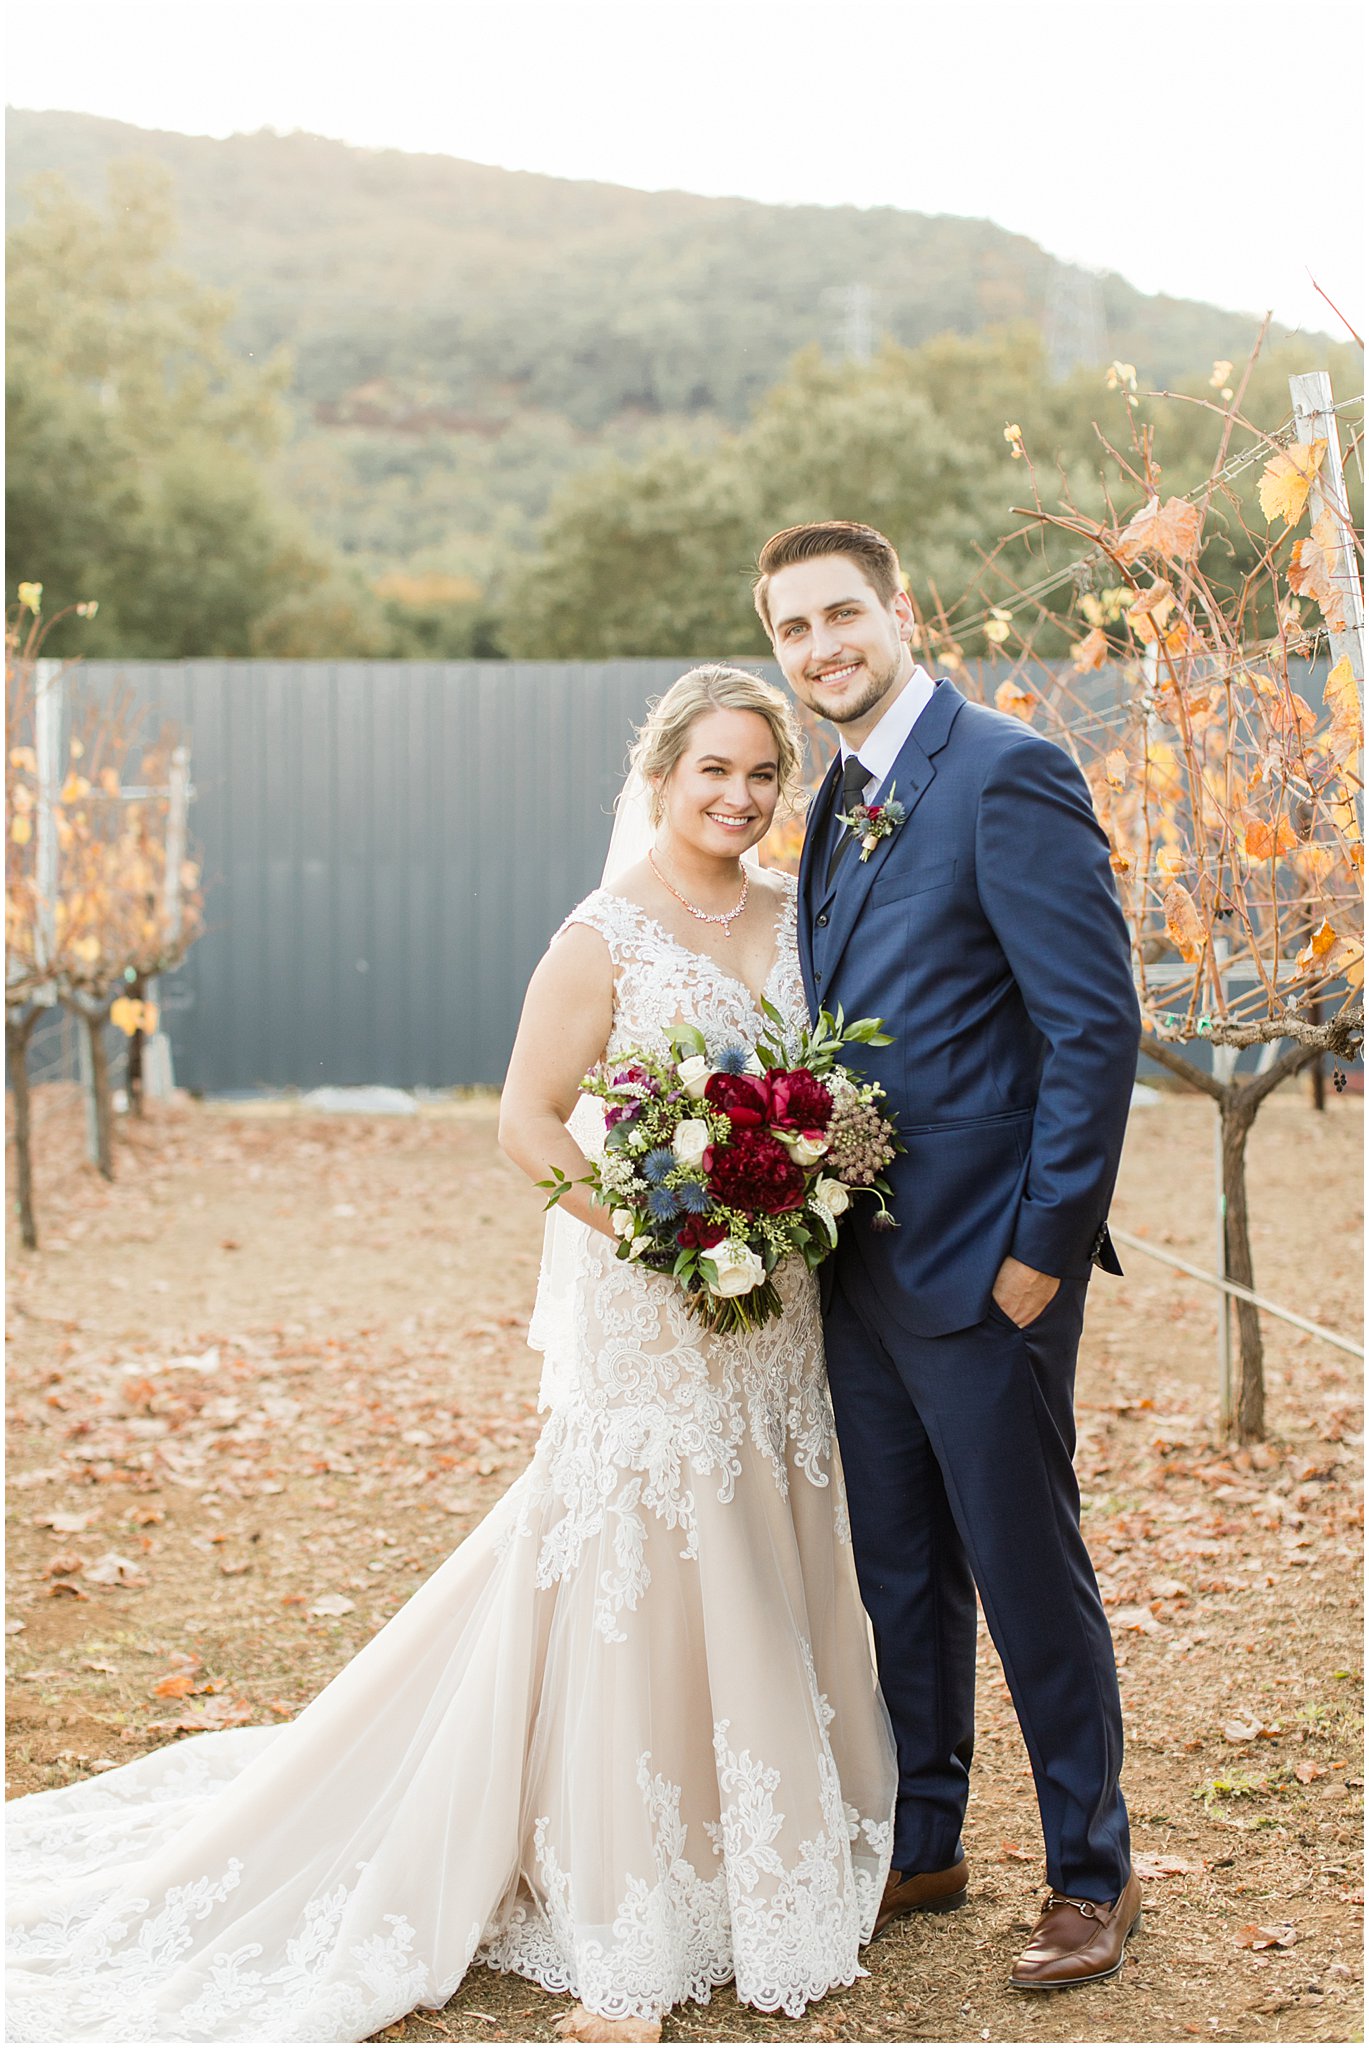 Sycamore Creek Vineyards Wedding - Live Love Leal - Fall Wedding - Bay Area Wedding Photographer - Angela Sue Photography_0113.jpg